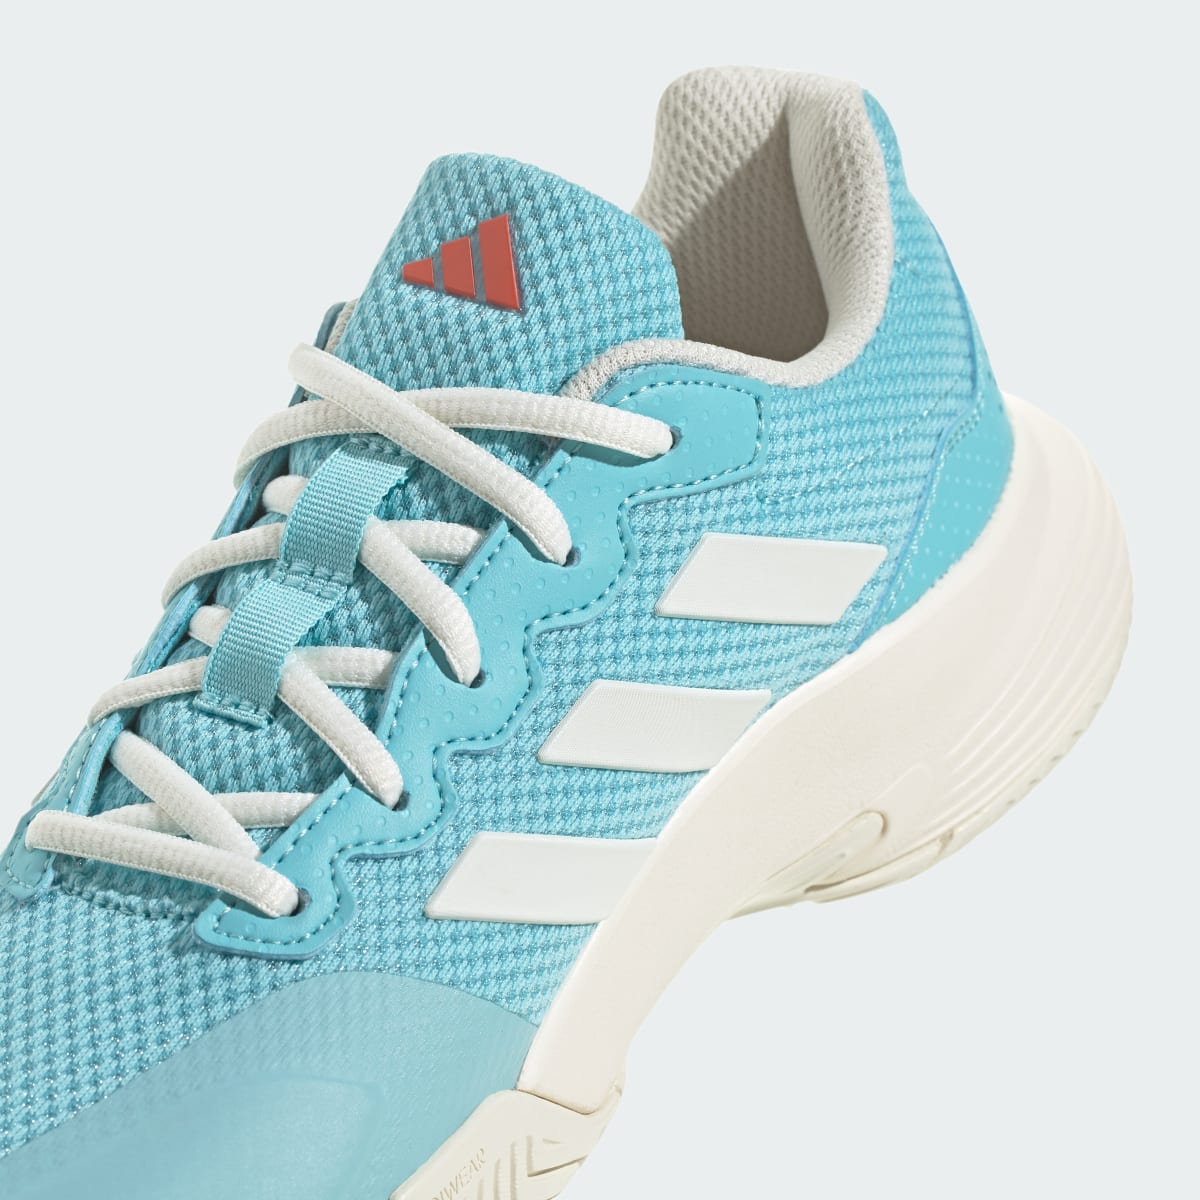 Adidas Gamecourt 2.0 Tenis Ayakkabısı. 10